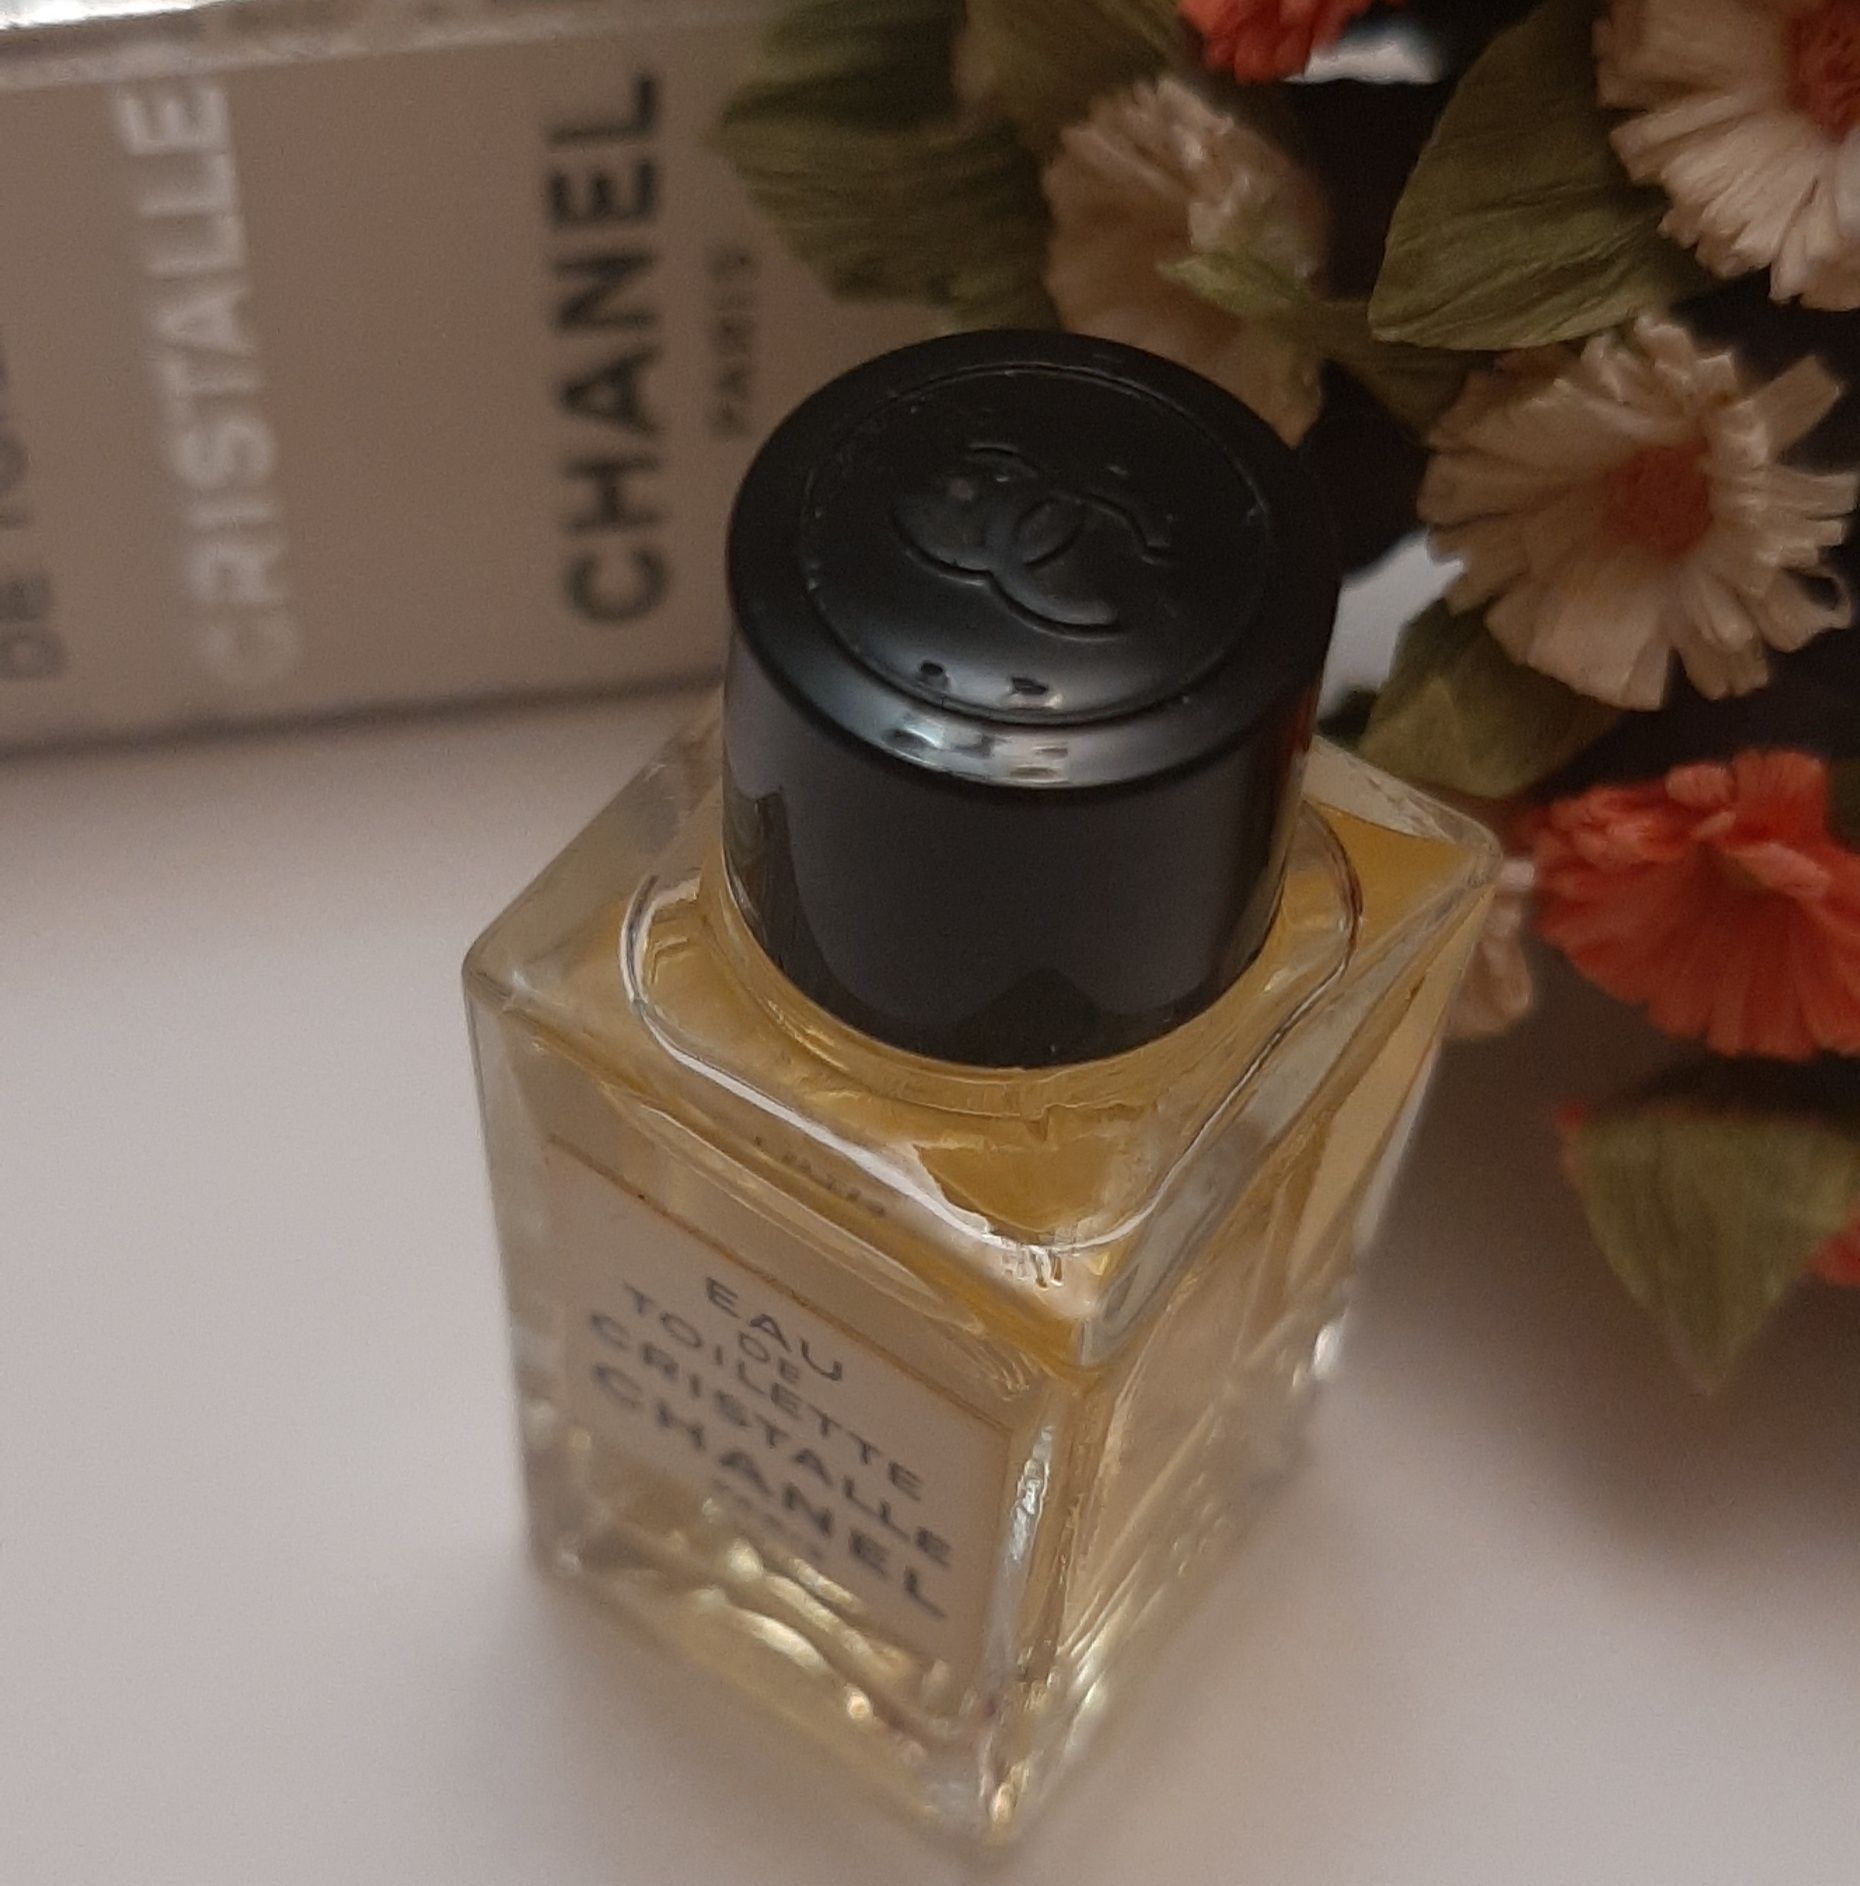 Chanel Cristalle edt 4 ml, miniatura vintage